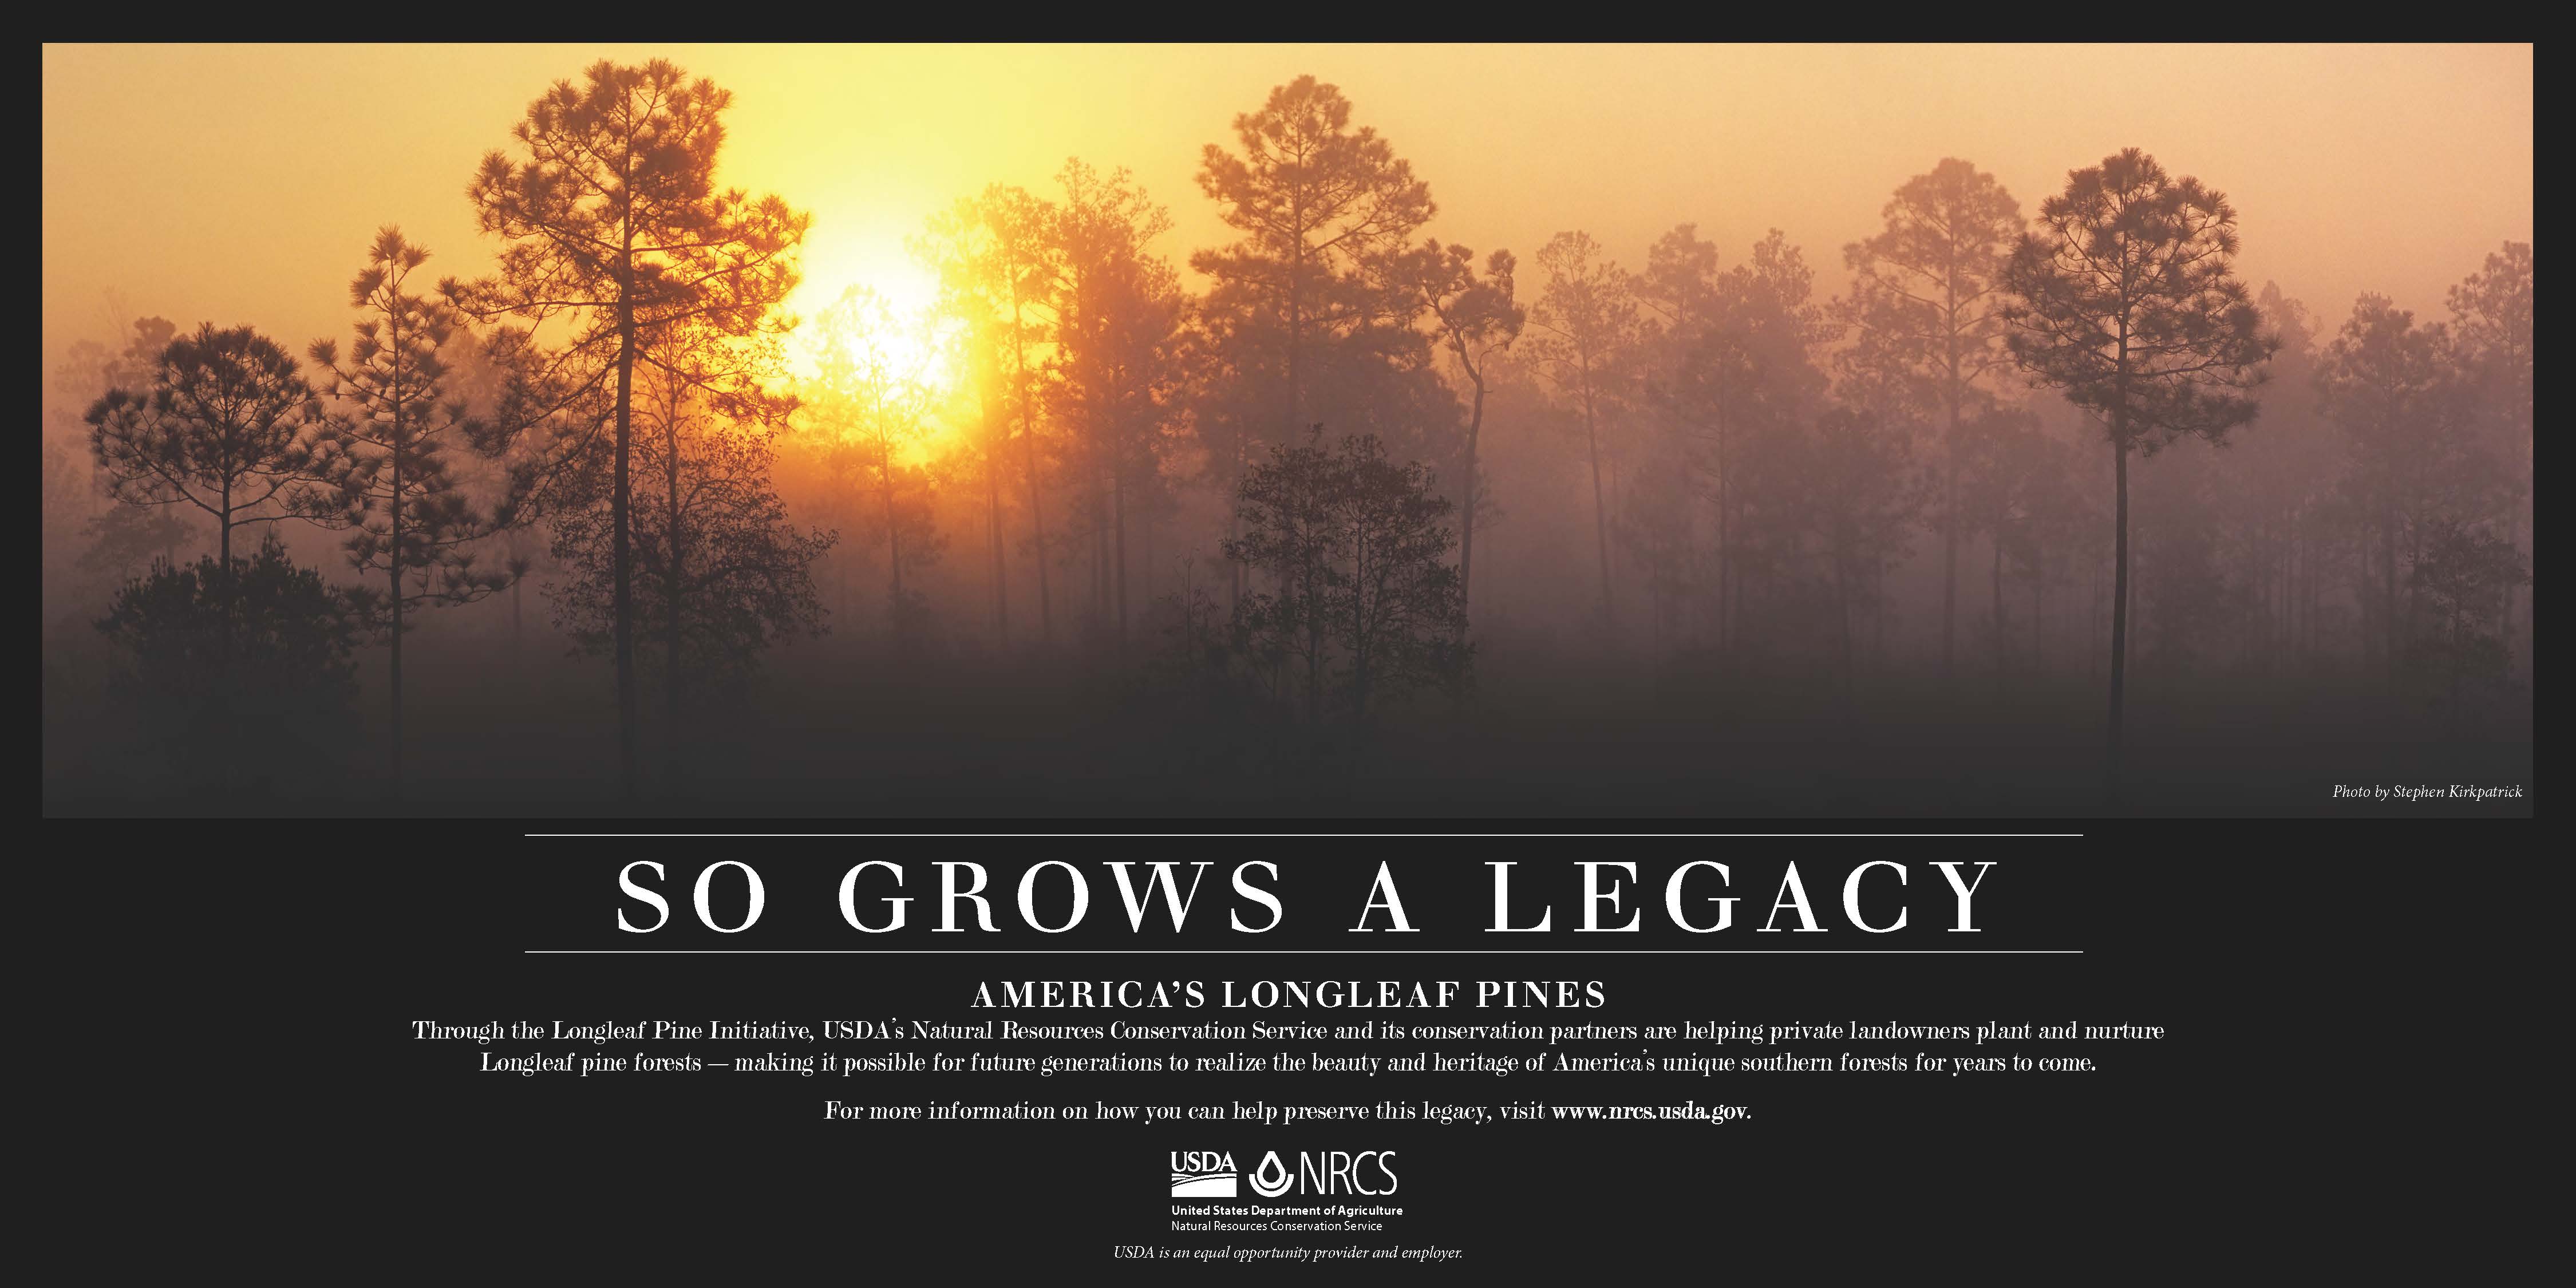 Longleaf Pine Initiative poster